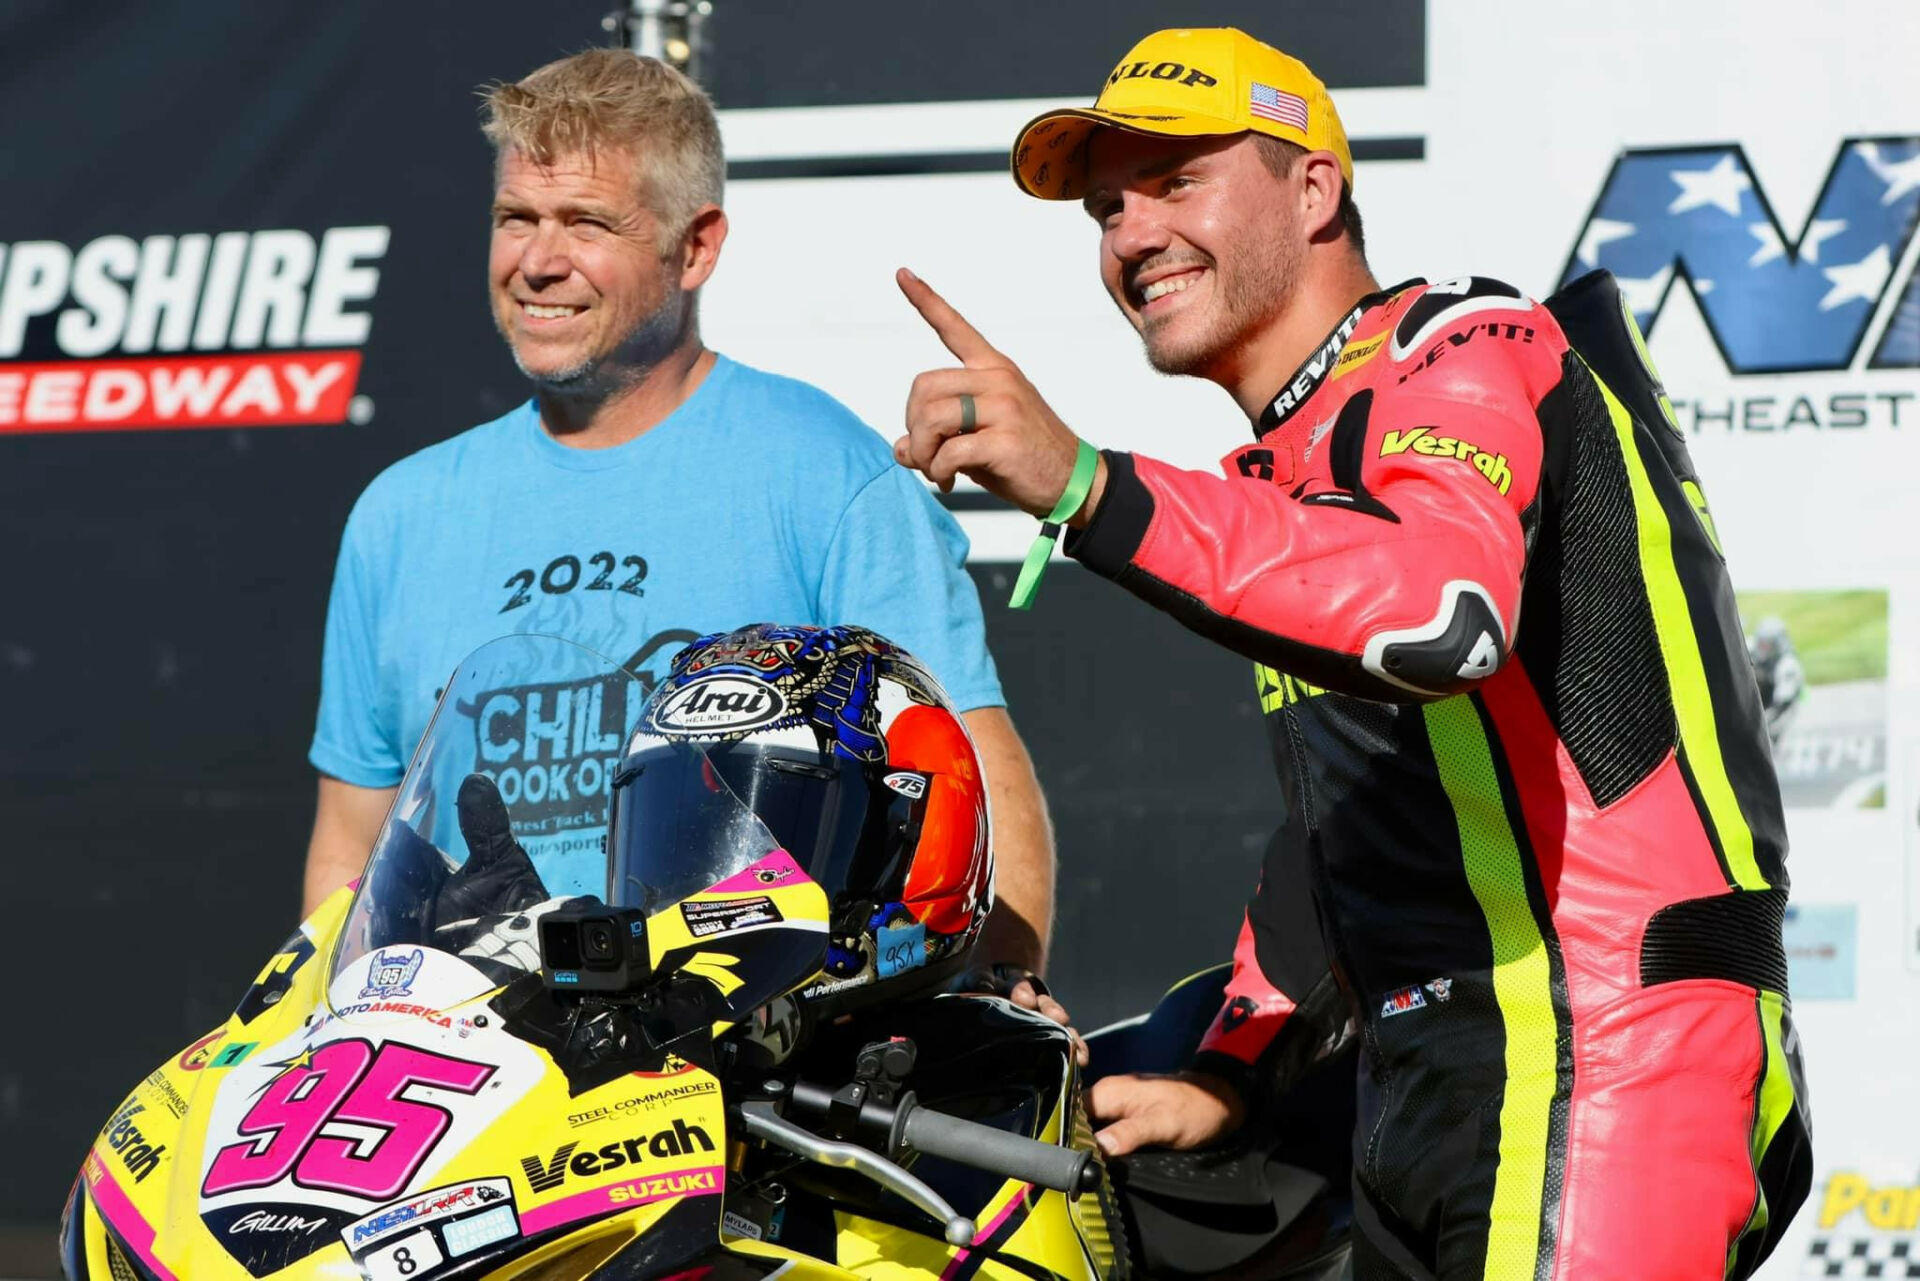 Hayden Gillim (right) and Mark Junge (left). Photo courtesy Real Steel Motorsports.